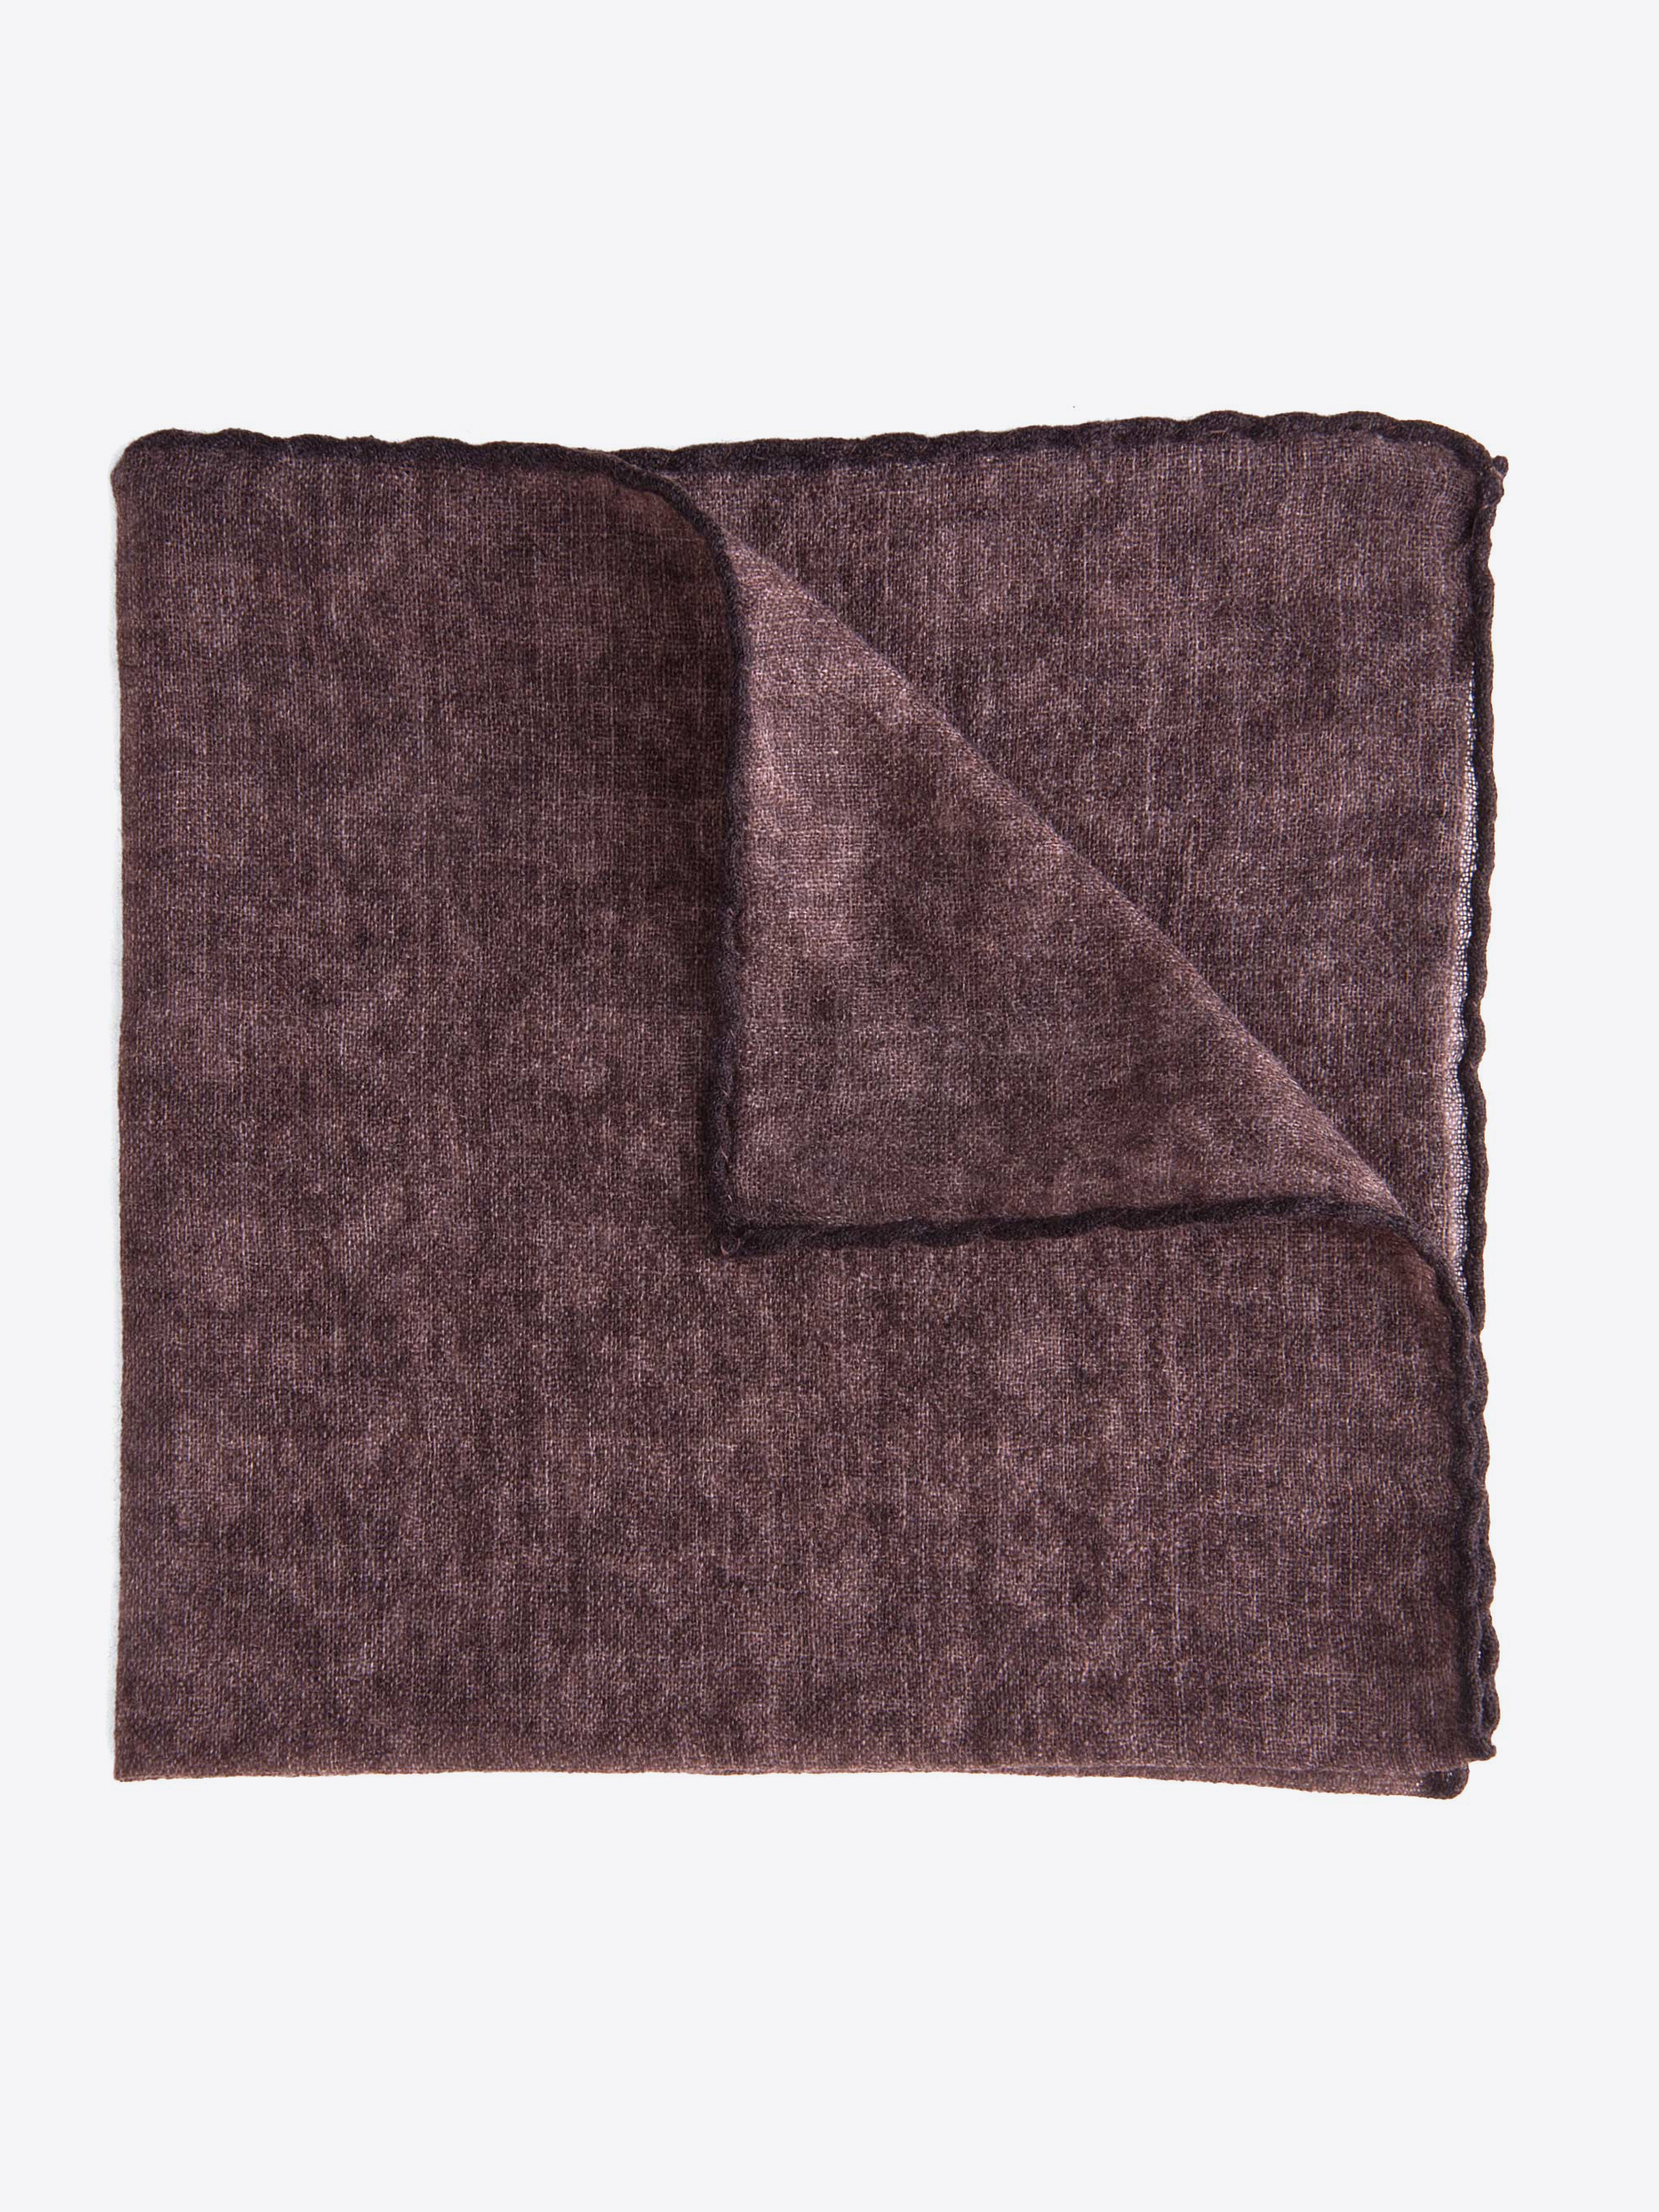 Zoom Image of Chestnut Wool Pocket Square